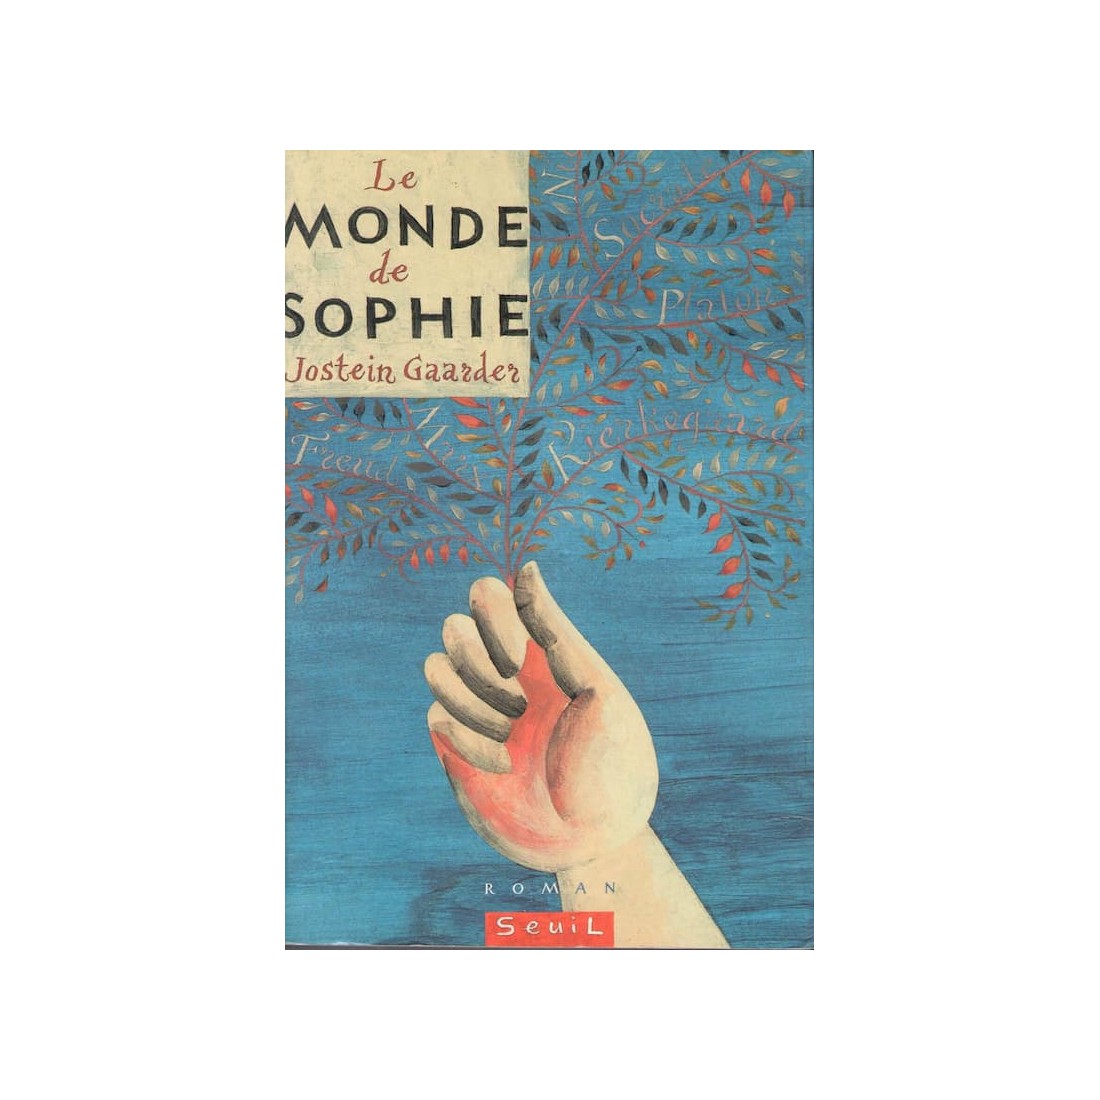 Le monde de sophie - Roman de Jostein Gaarder - Ocazlivres.com